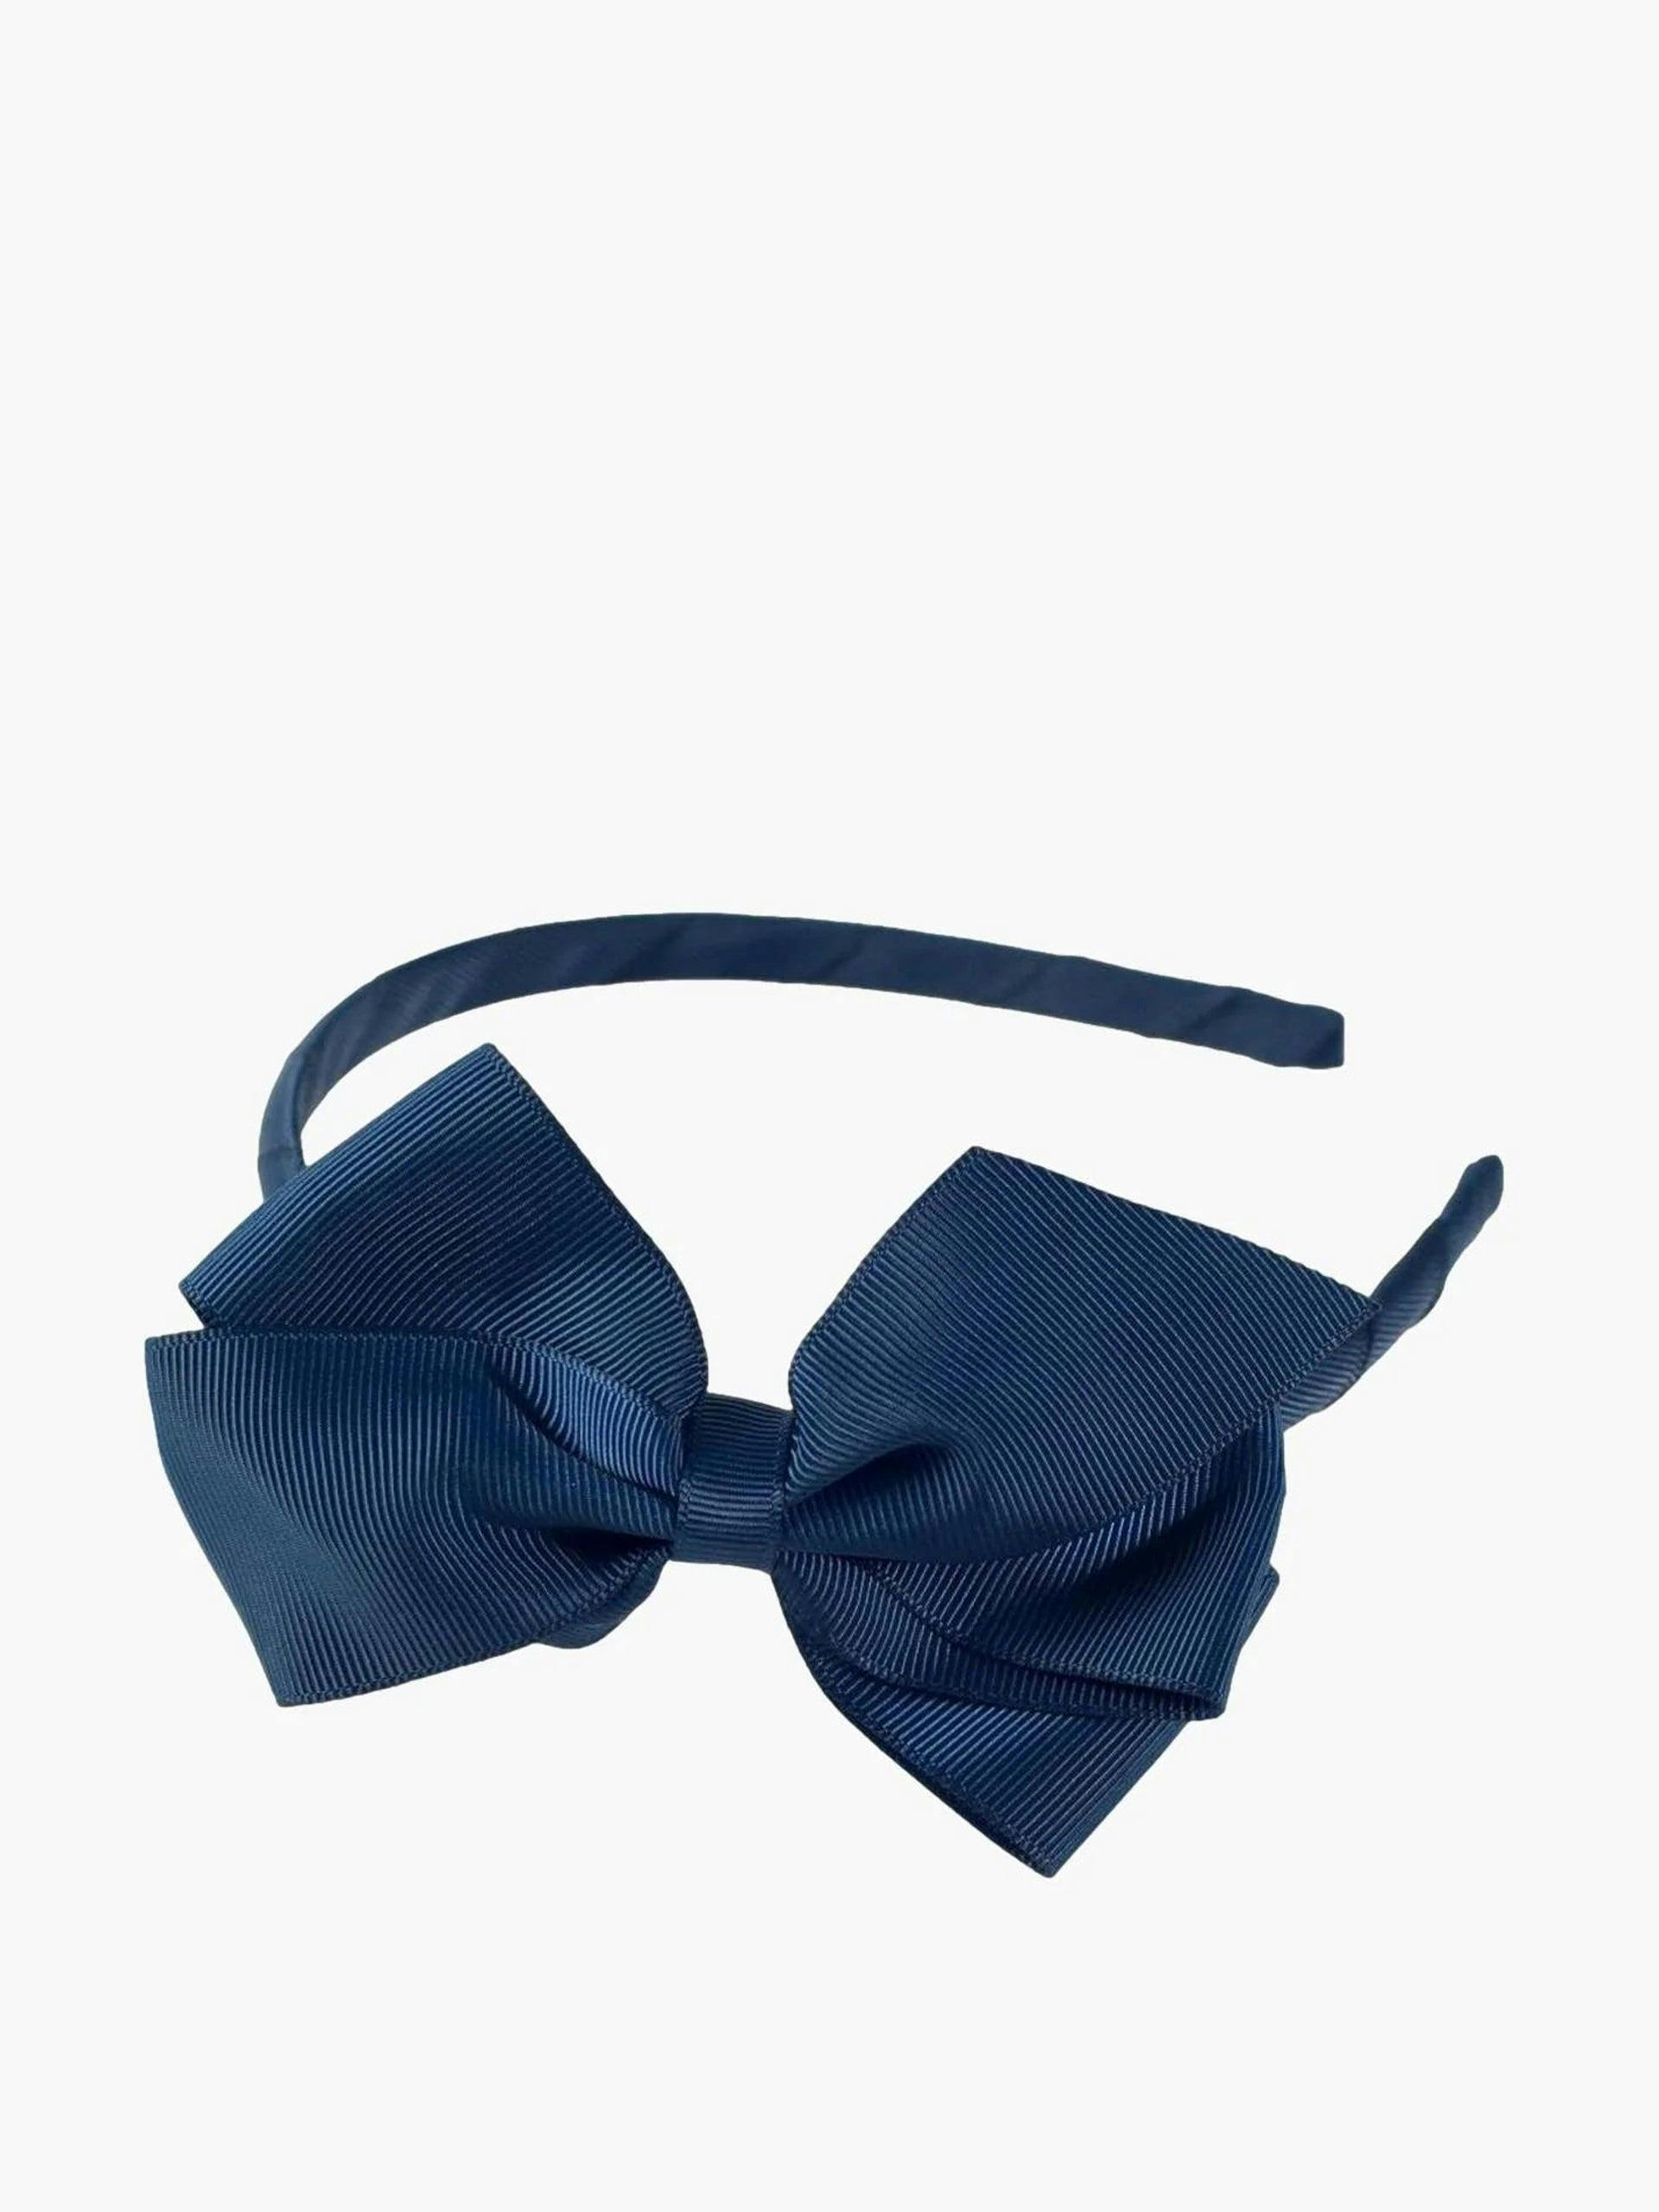 Navy blue headband